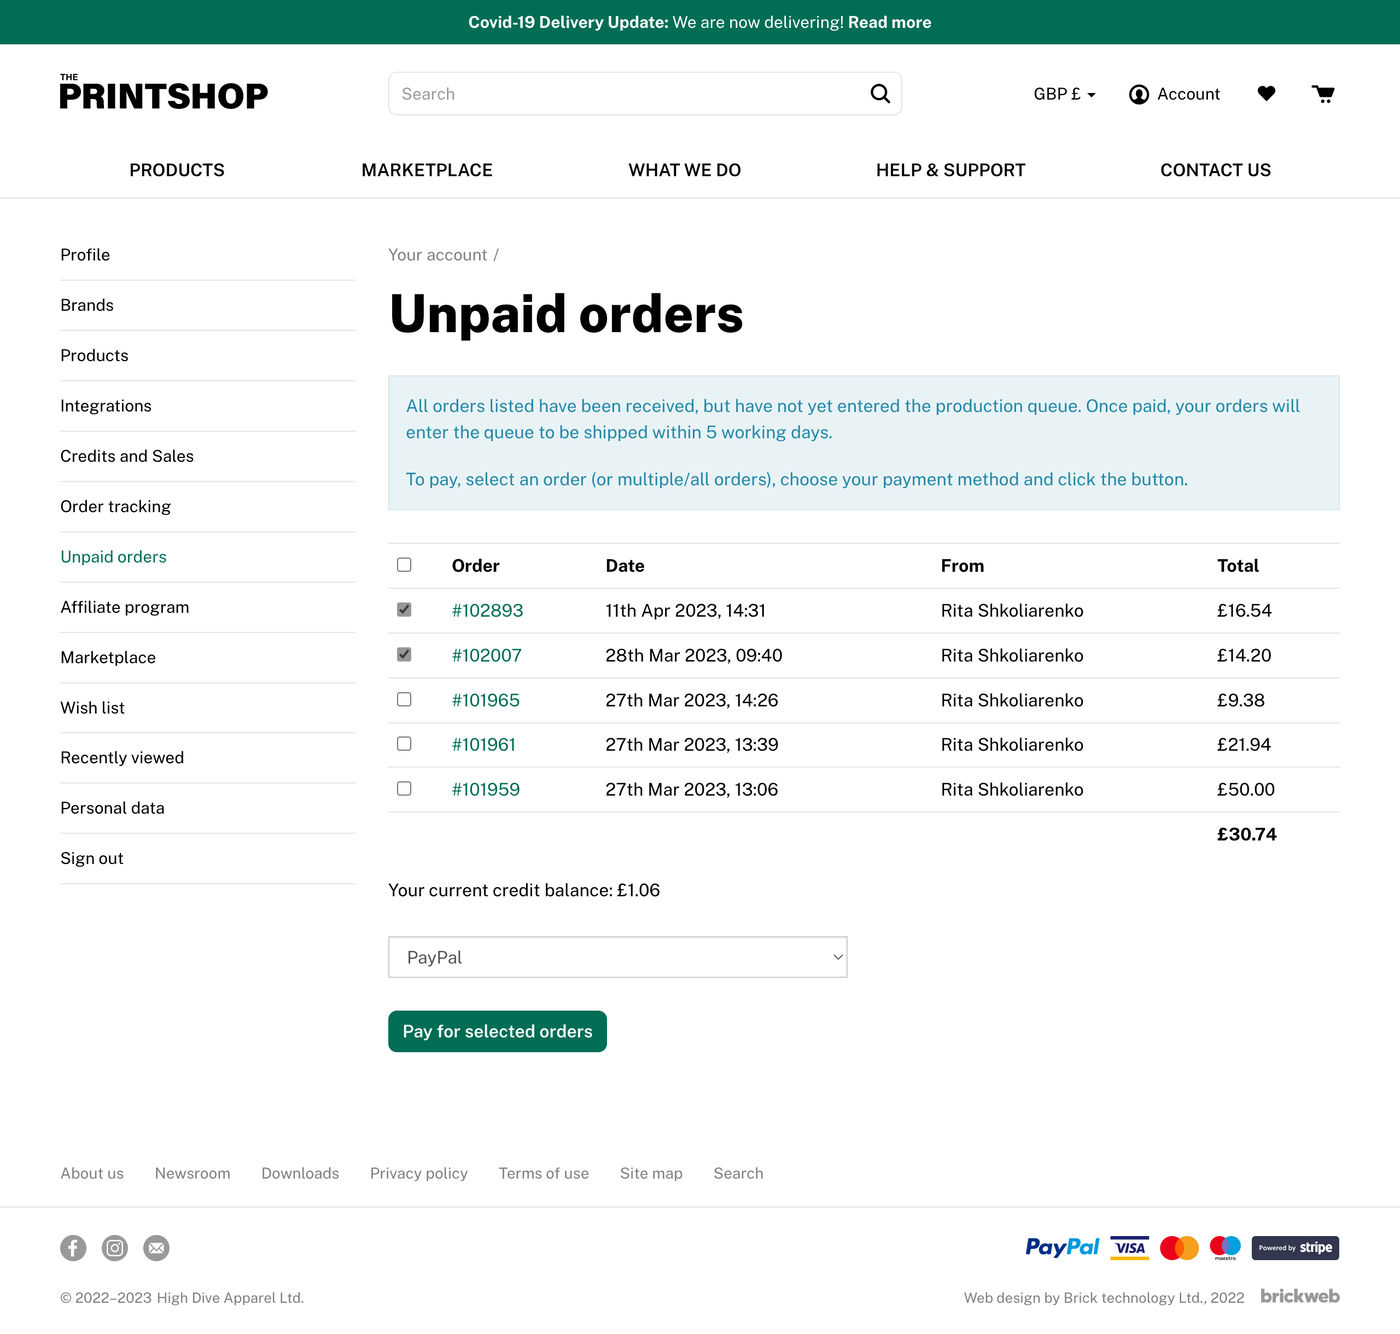 The Print Shop Unpaid orders